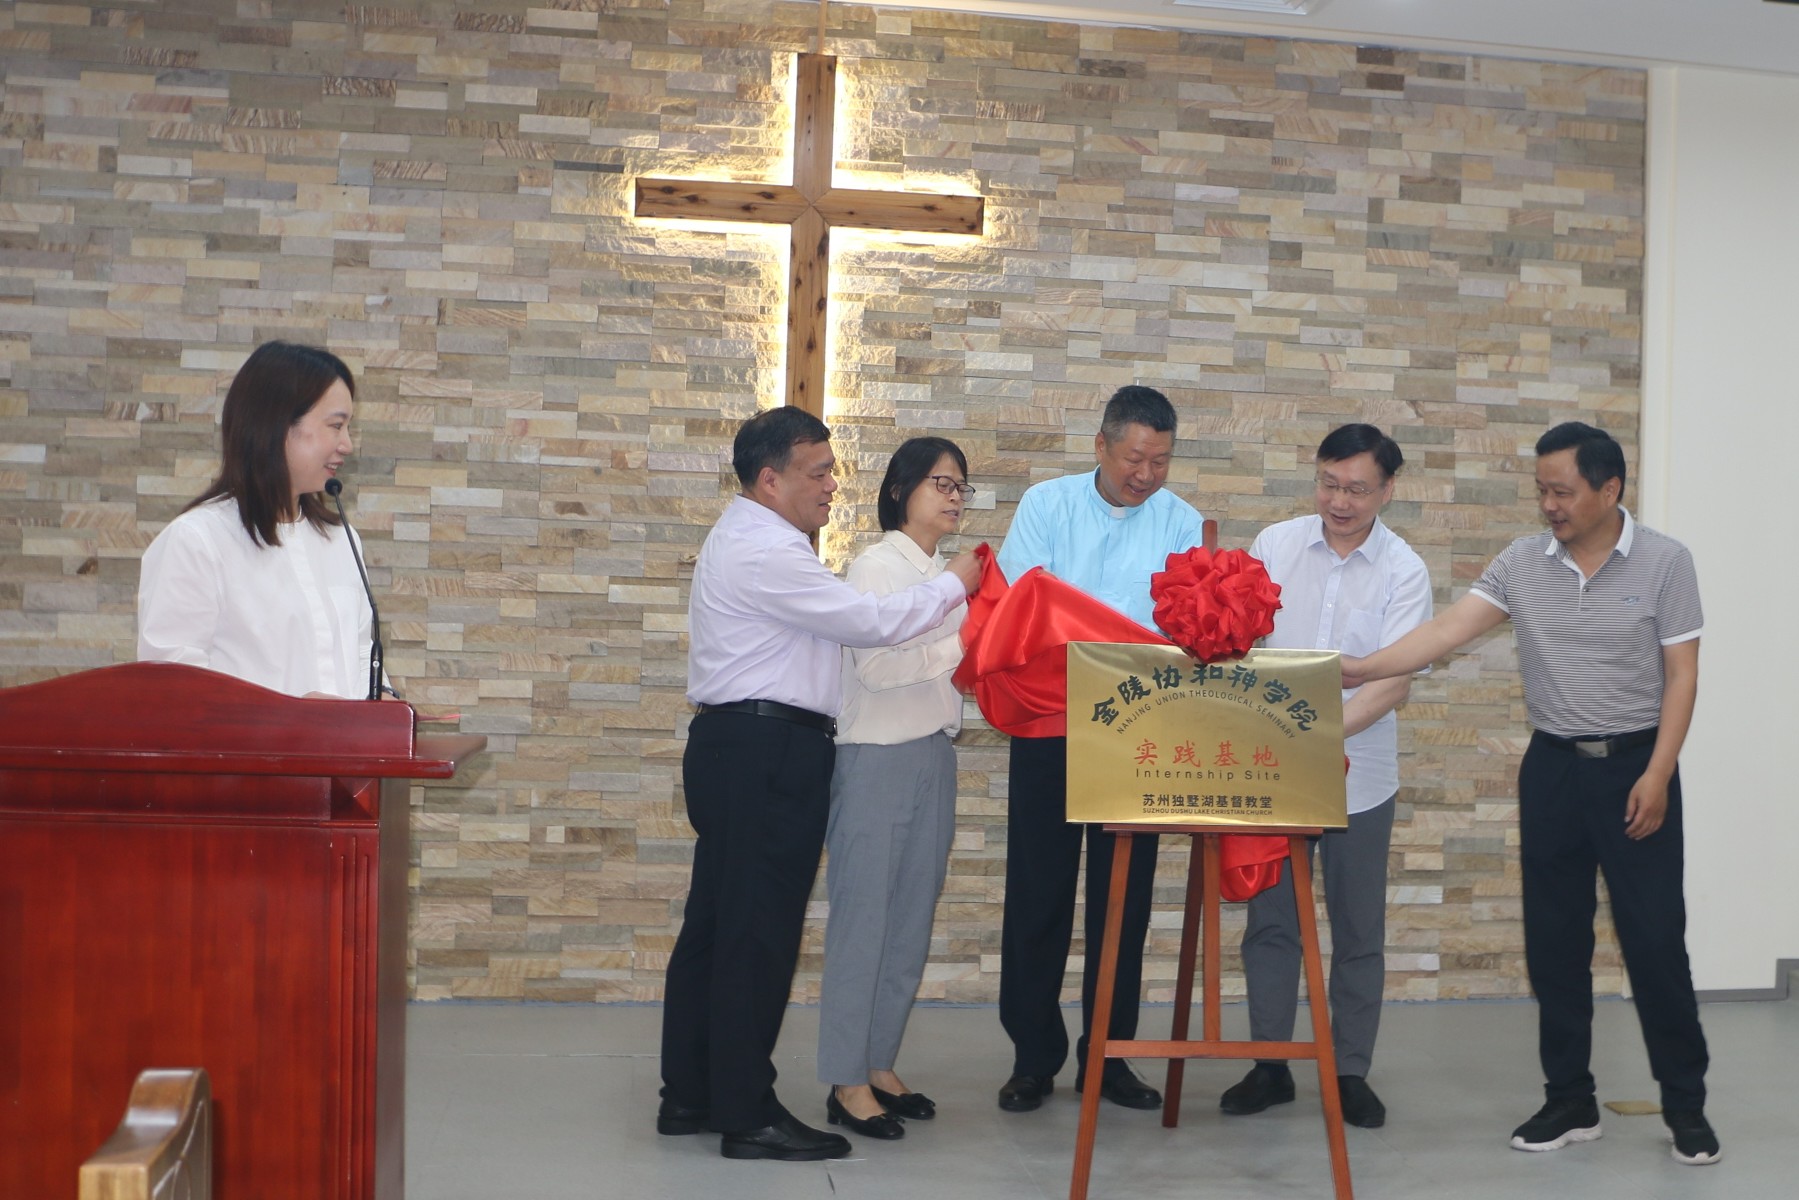 Rev. Chen Yilu (third from right), executive vice president of Nanjing Union Theological Seminary, unveiled the plaque for the Nanjing Union Theological Seminary internship site at Dushuhu Church in Suzhou City, Jiangsu Province, on July 22, 2023.